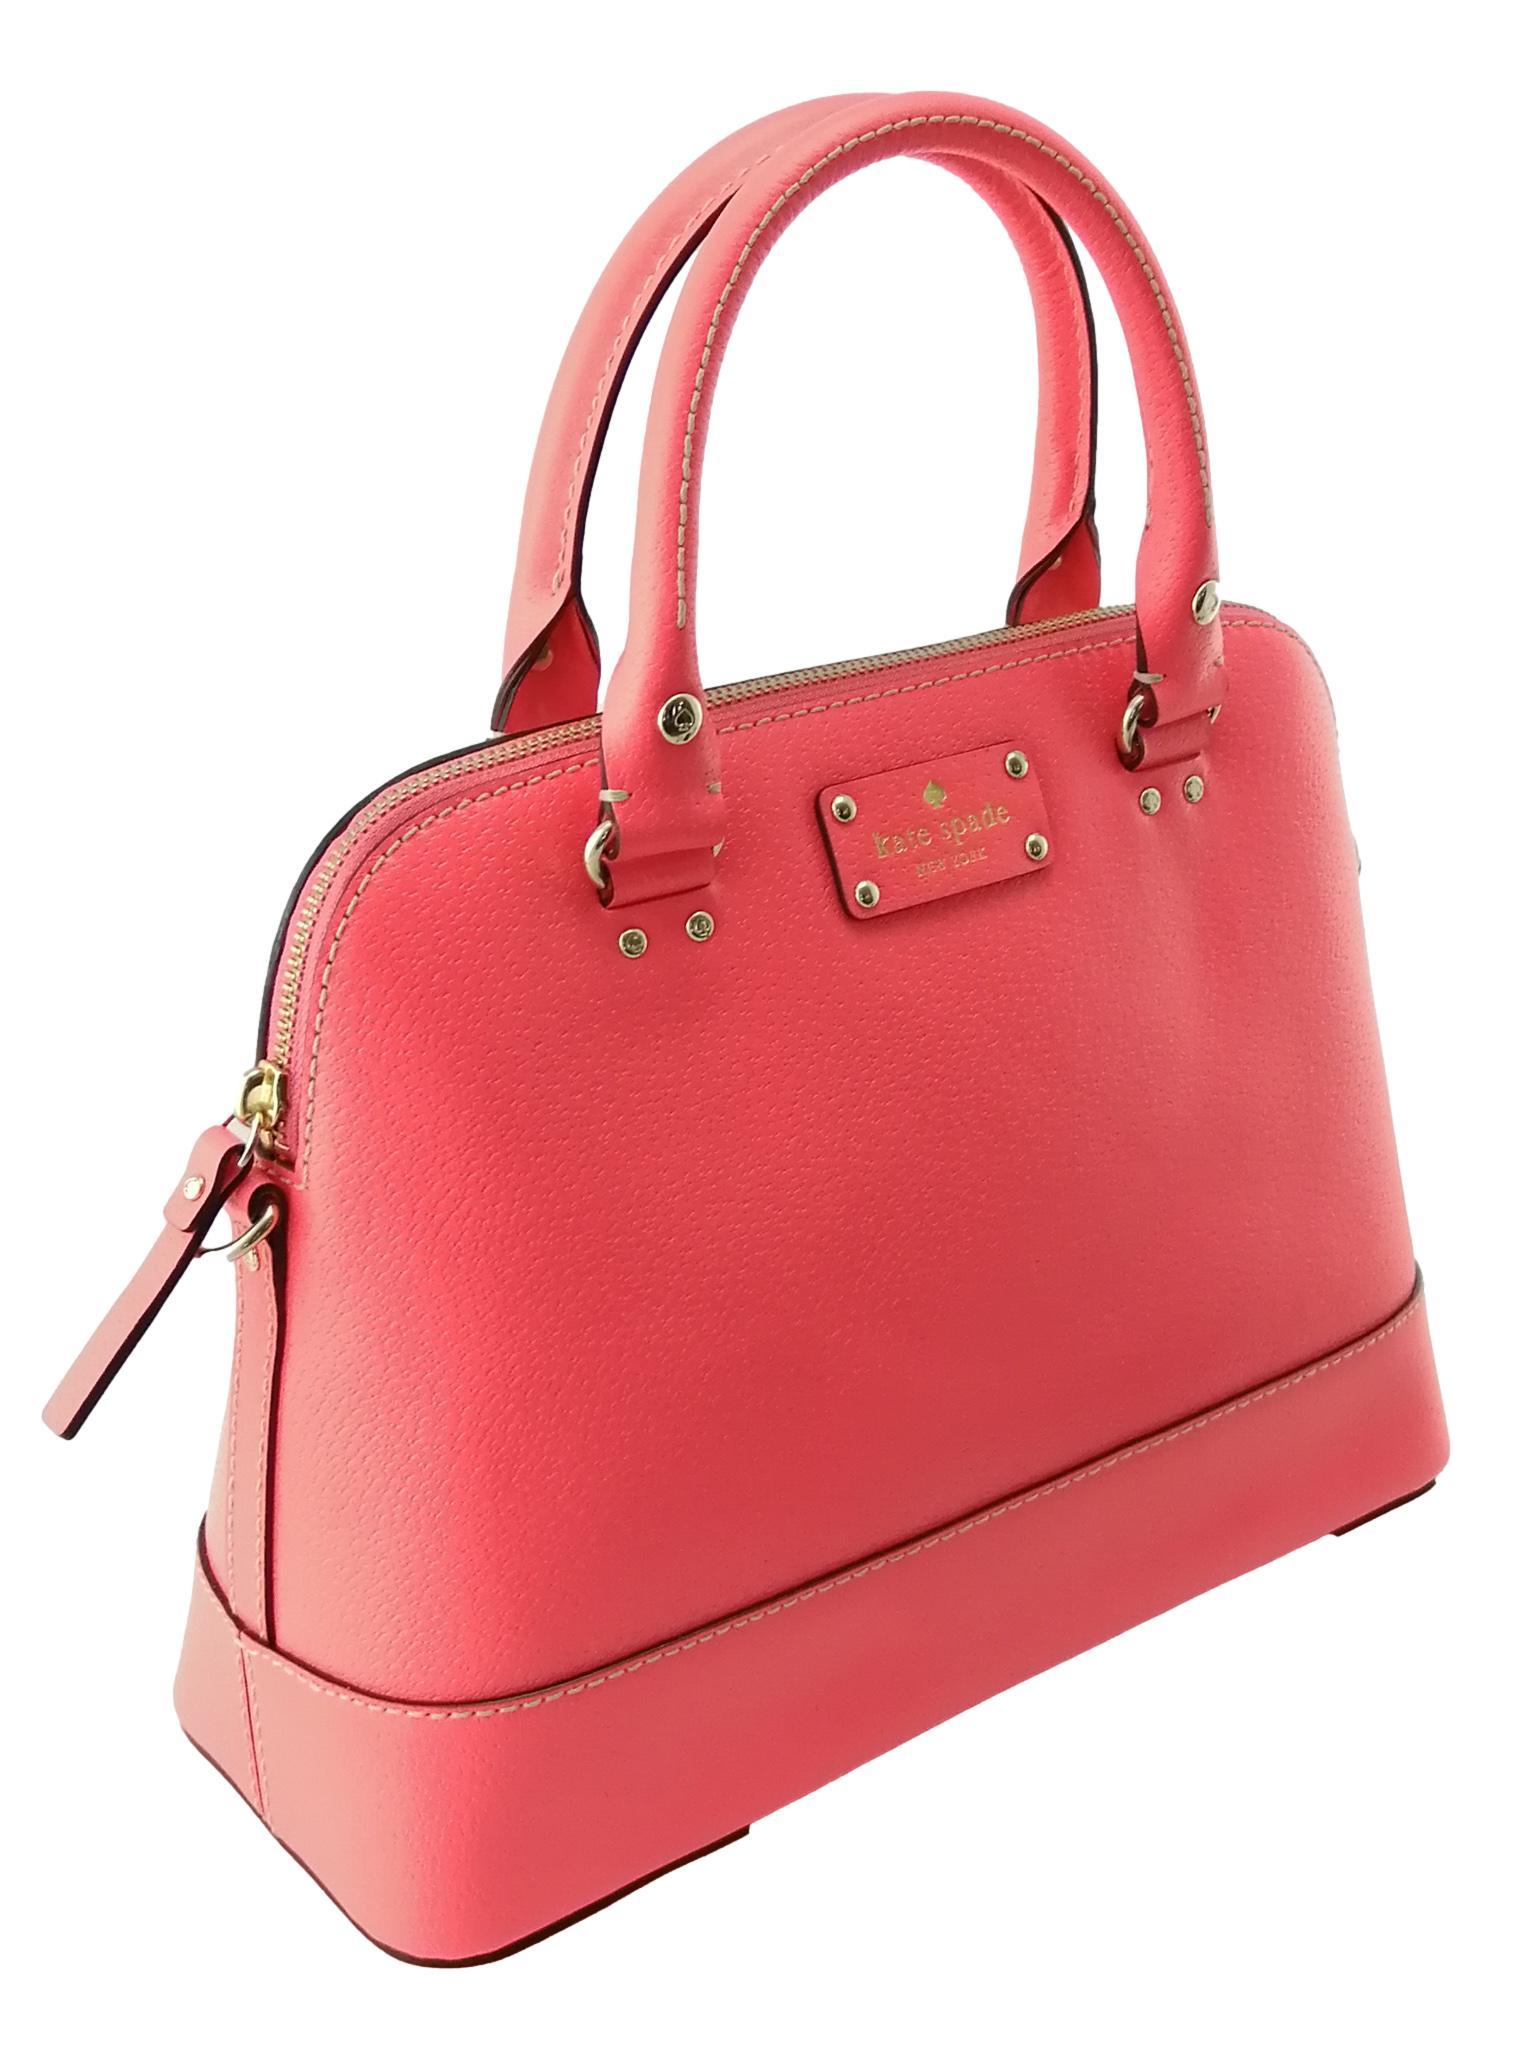 NWT Kate Spade New York Margaux pink large satchel | Kate spade purse pink,  Blue satchel, Kate spade purse black